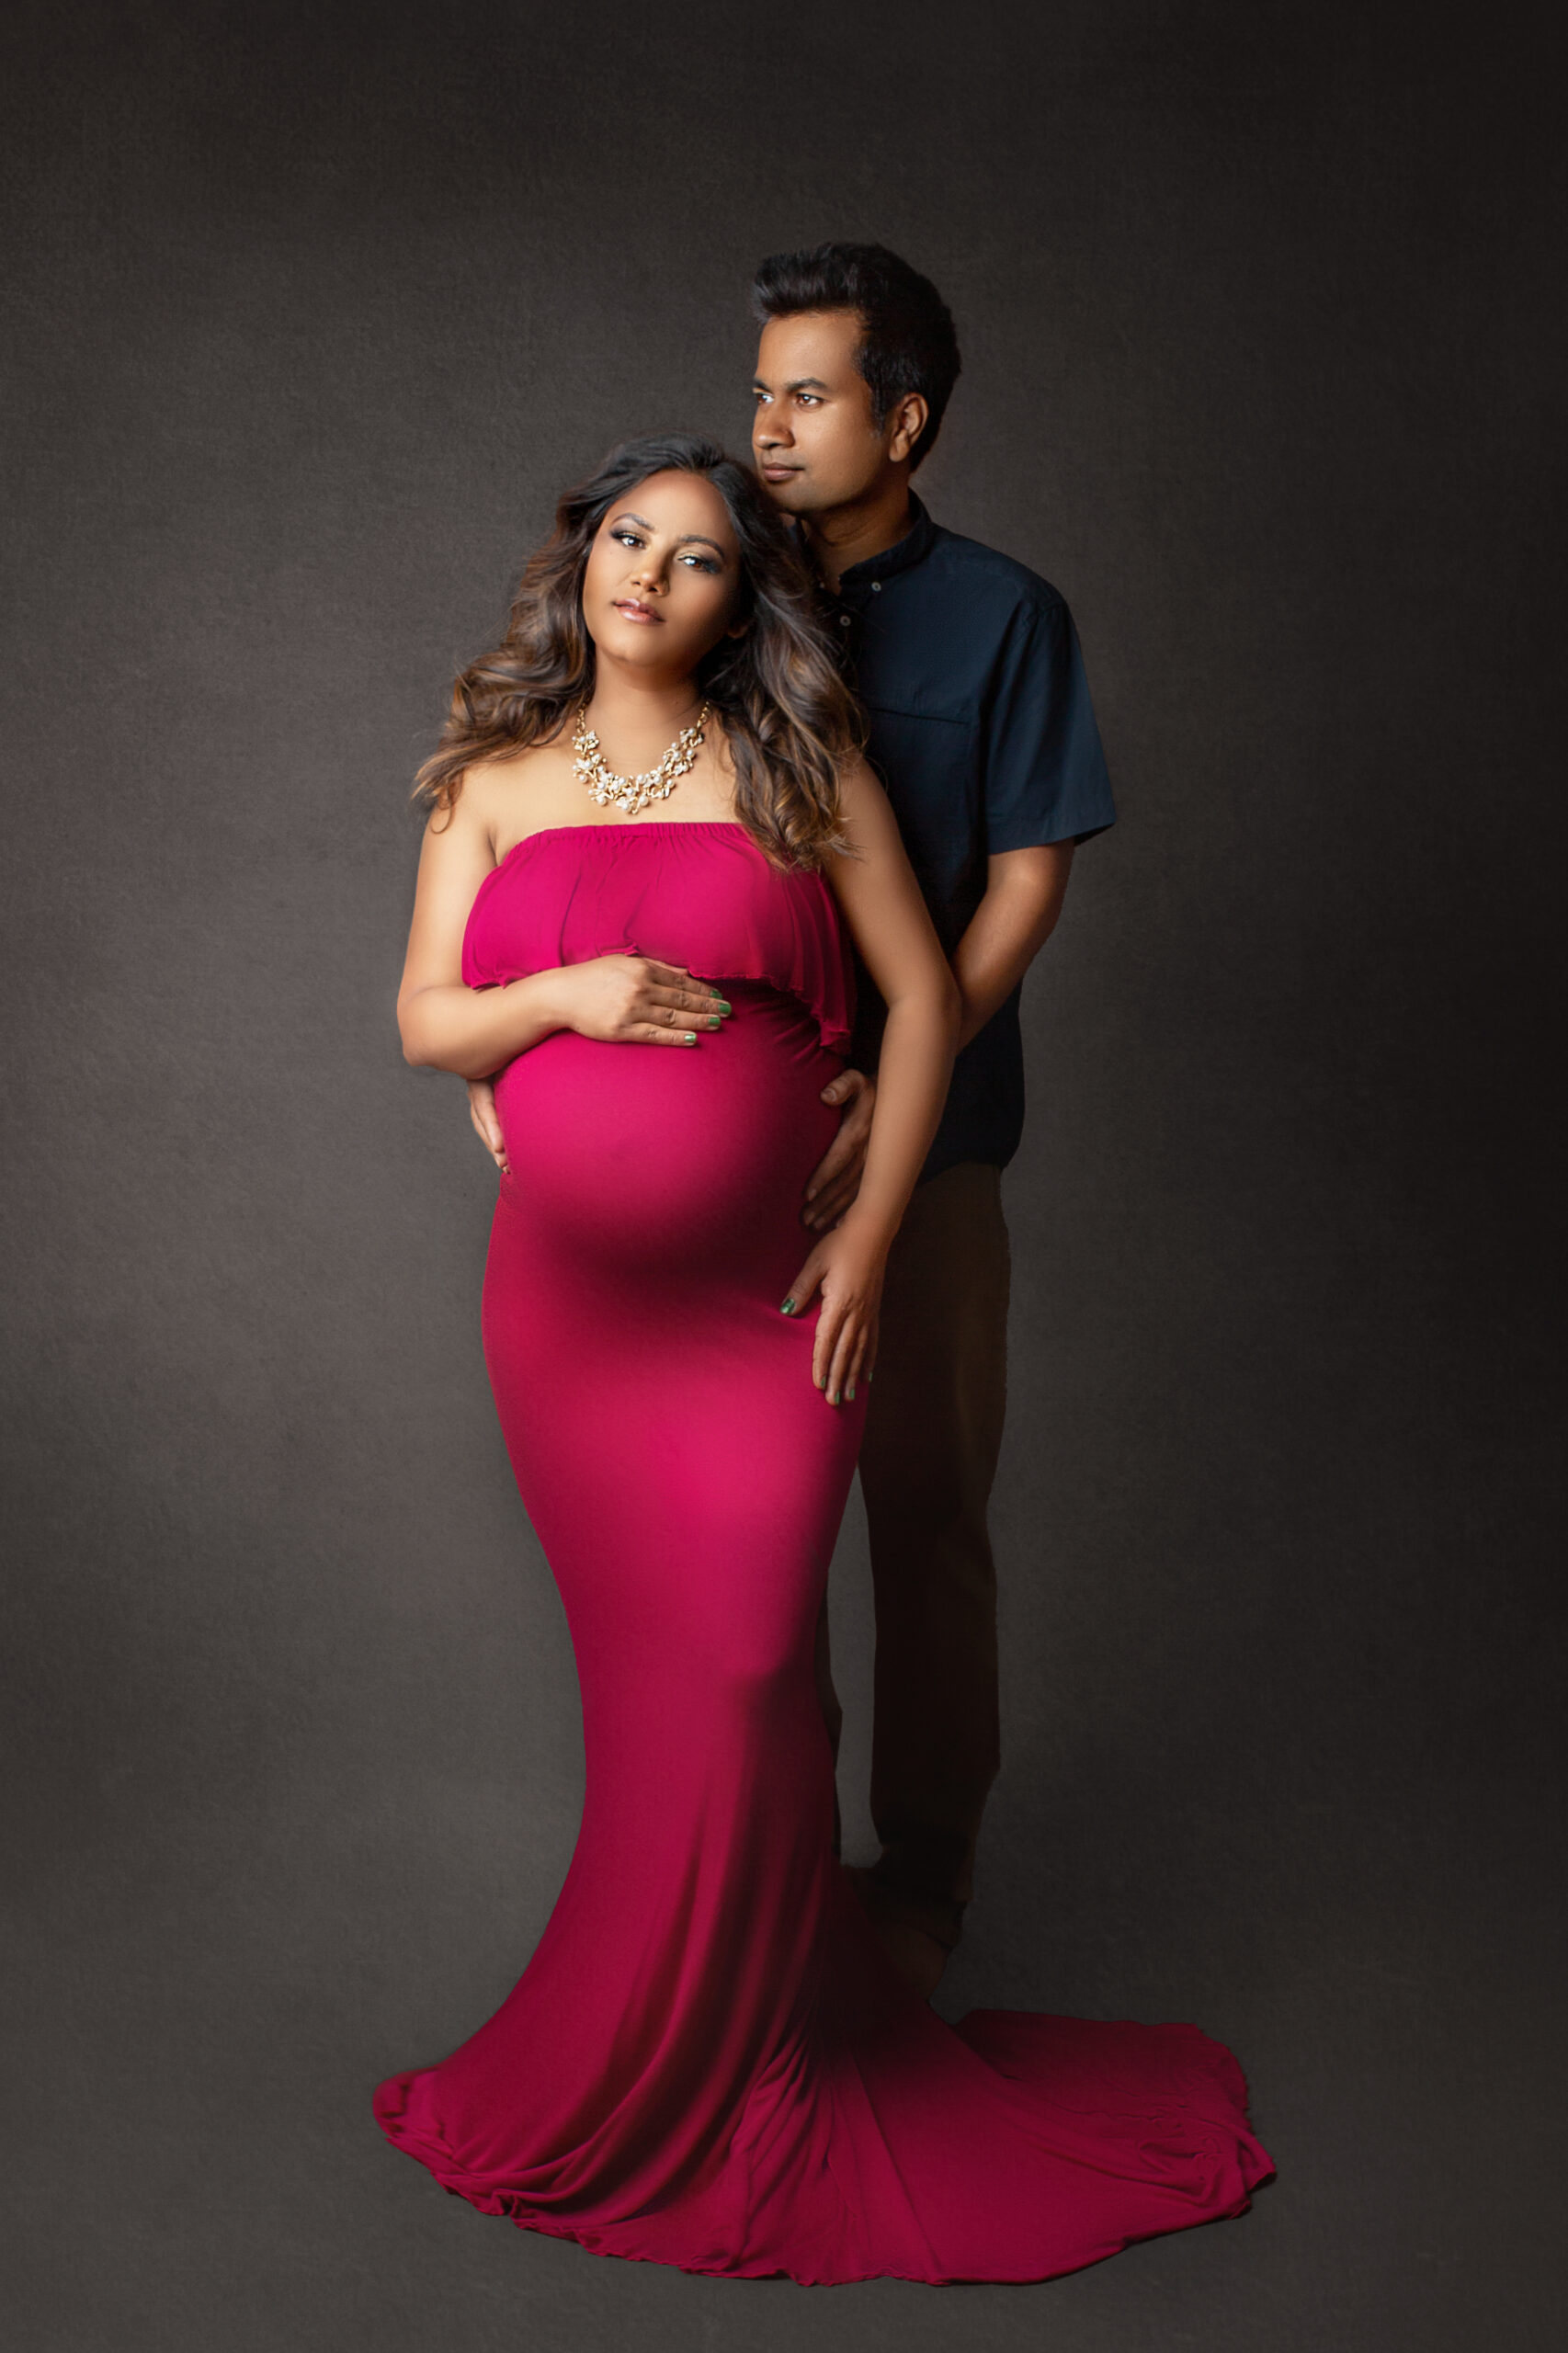 couple poses for hamilton midwife clinic photoshoot